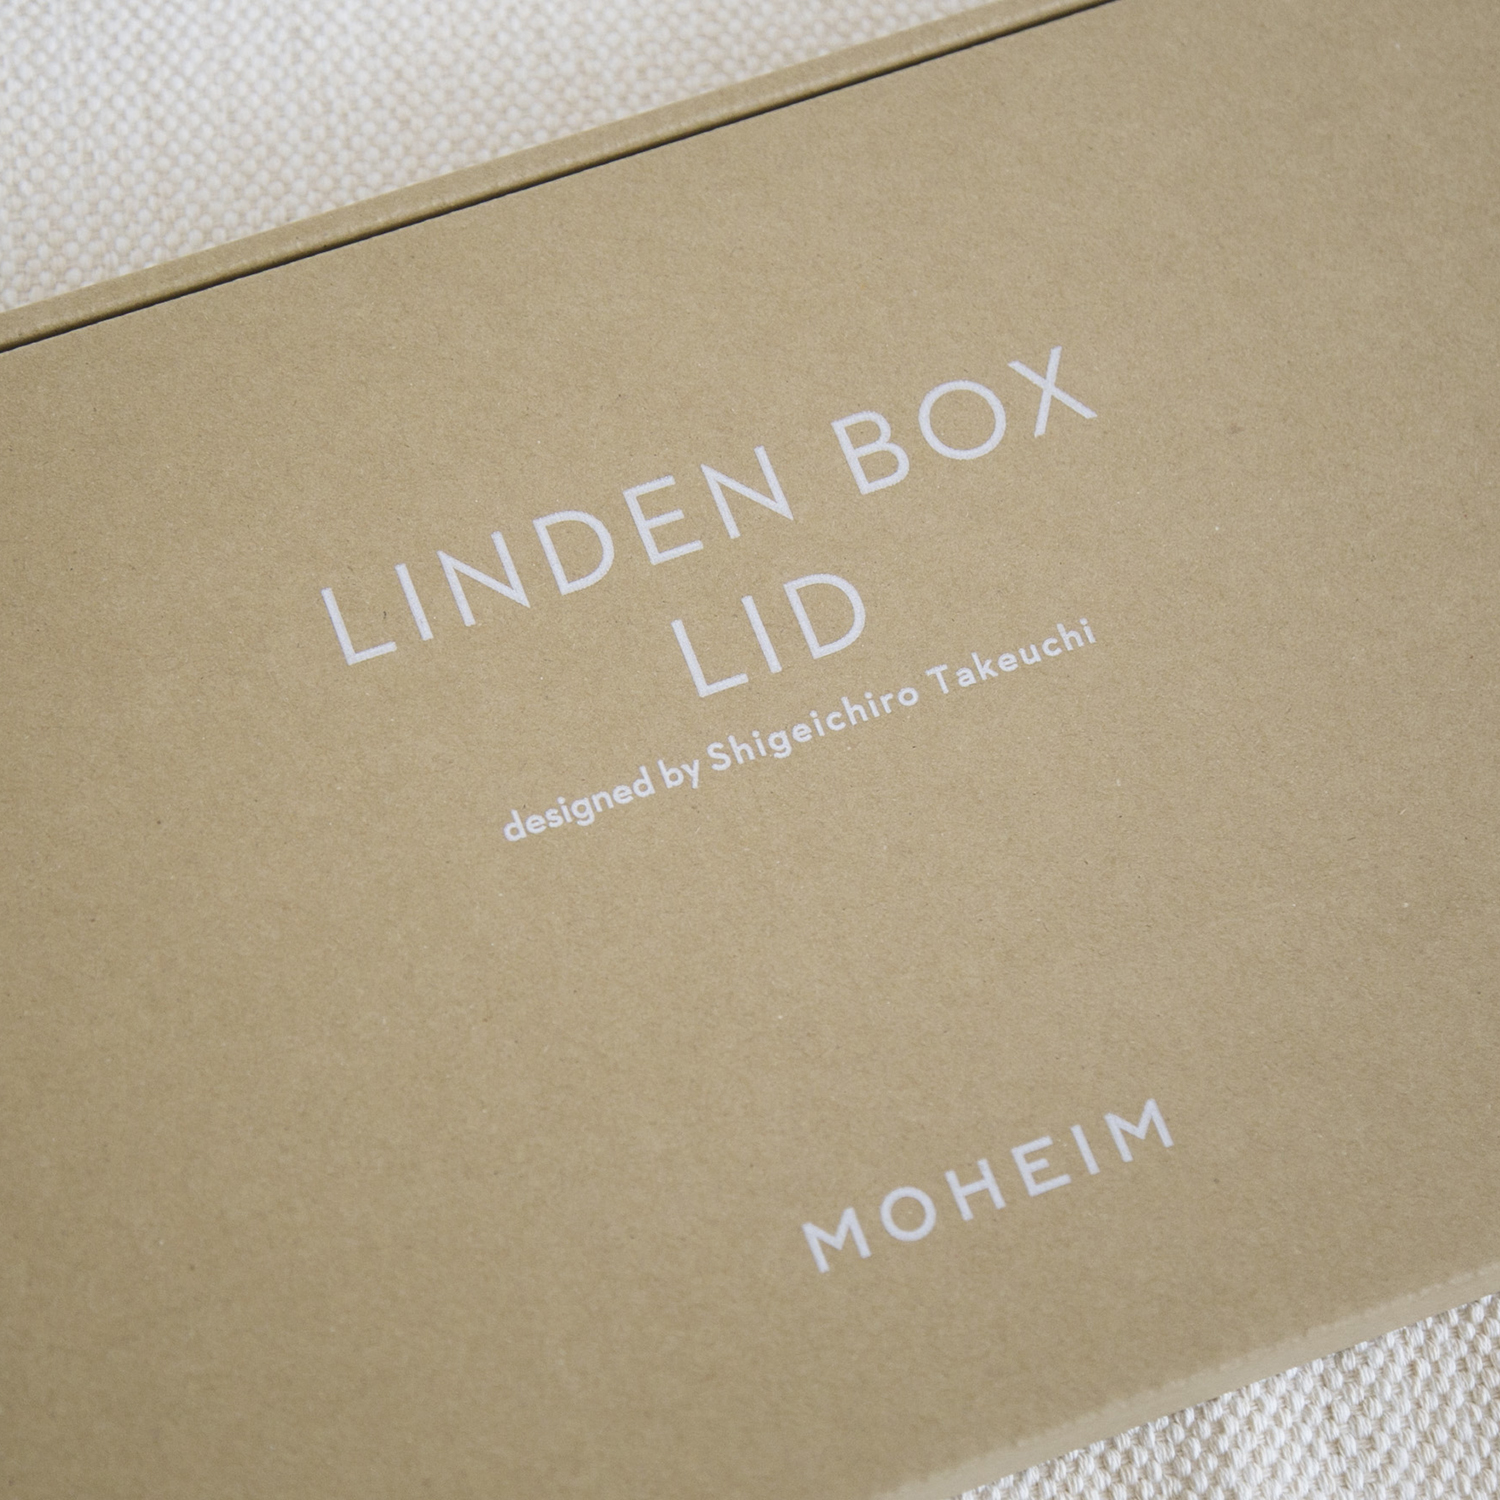 MOHEIM/LINDEN BOX フタ